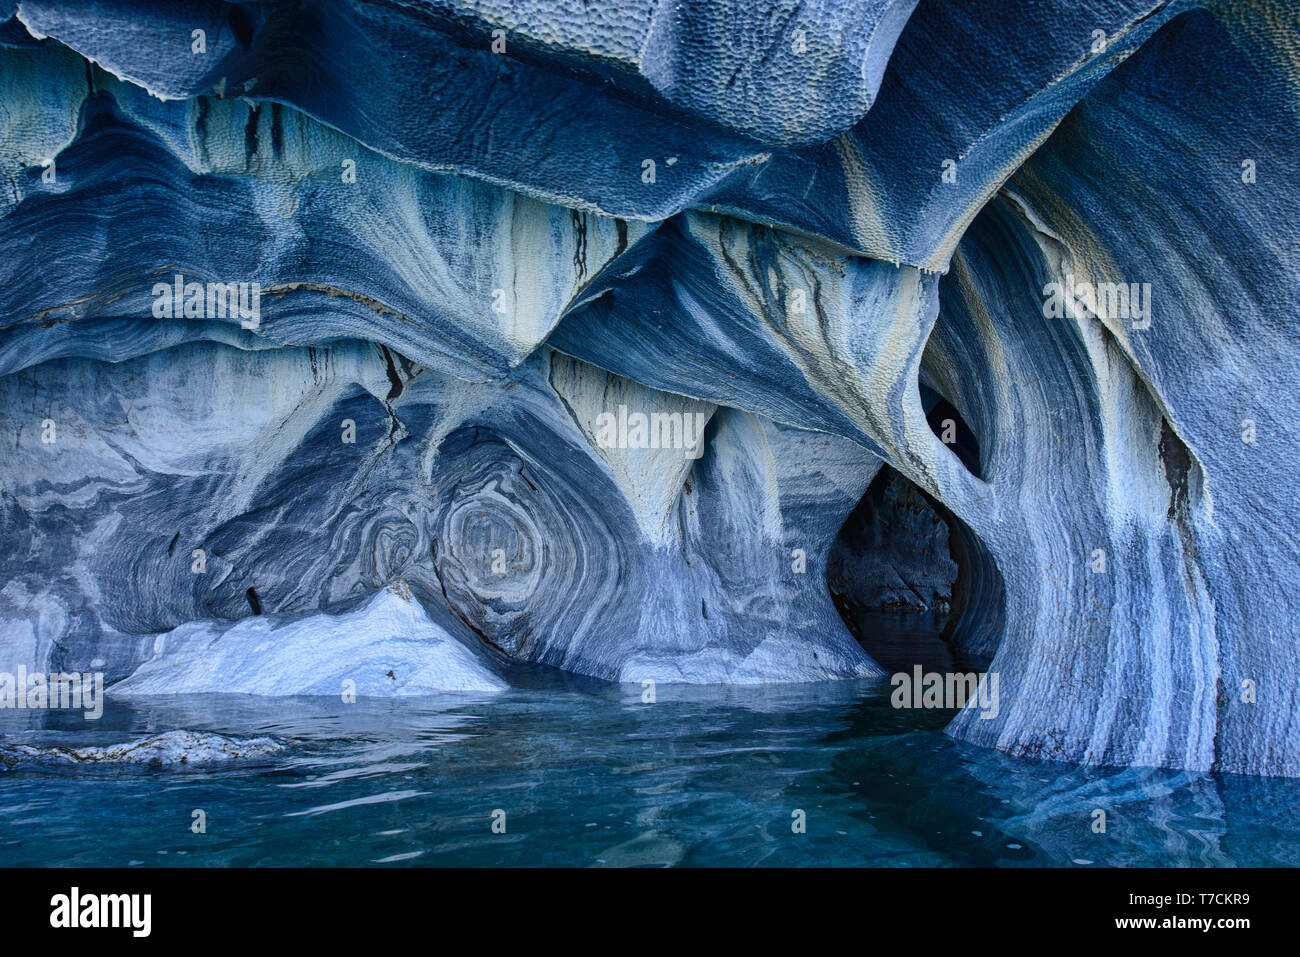 Le cave di marmo (Capilla de Marmol), Rio tranquilo, Aysen, Patagonia, Cile Foto Stock